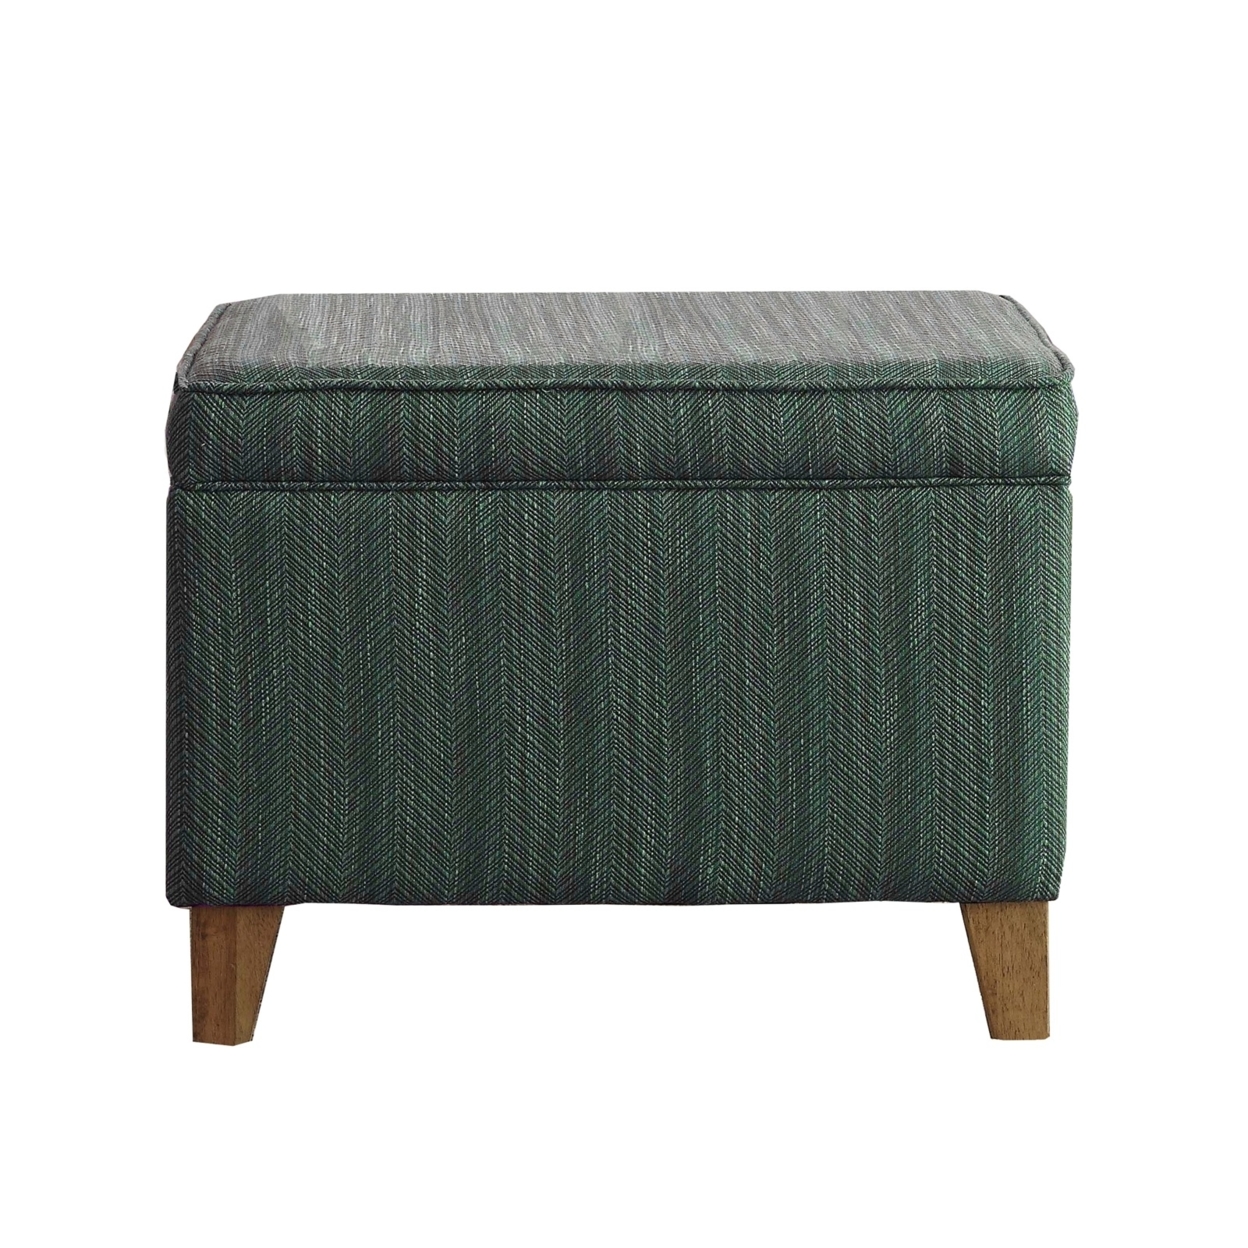 Rectangular Fabric Upholstered Wooden Ottoman With Lift Top Storage, Green- Saltoro Sherpi